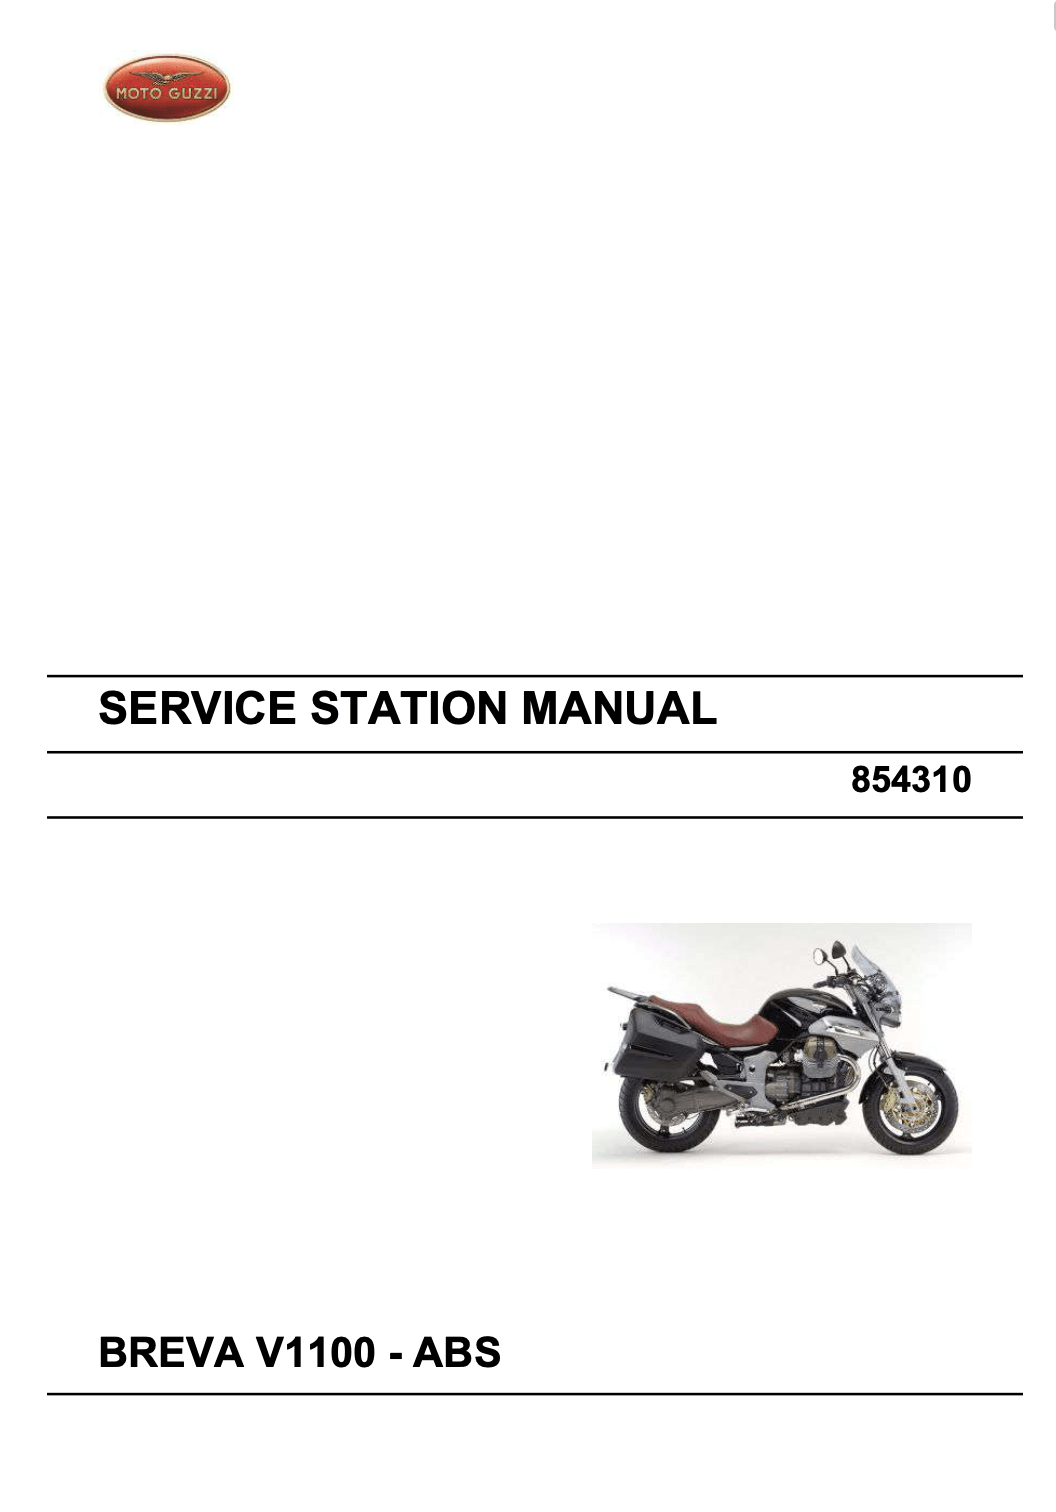 Moto Guzzi Breva V1100 ABS Service Manual original motorcycle manufacturer's PDF repair manual download